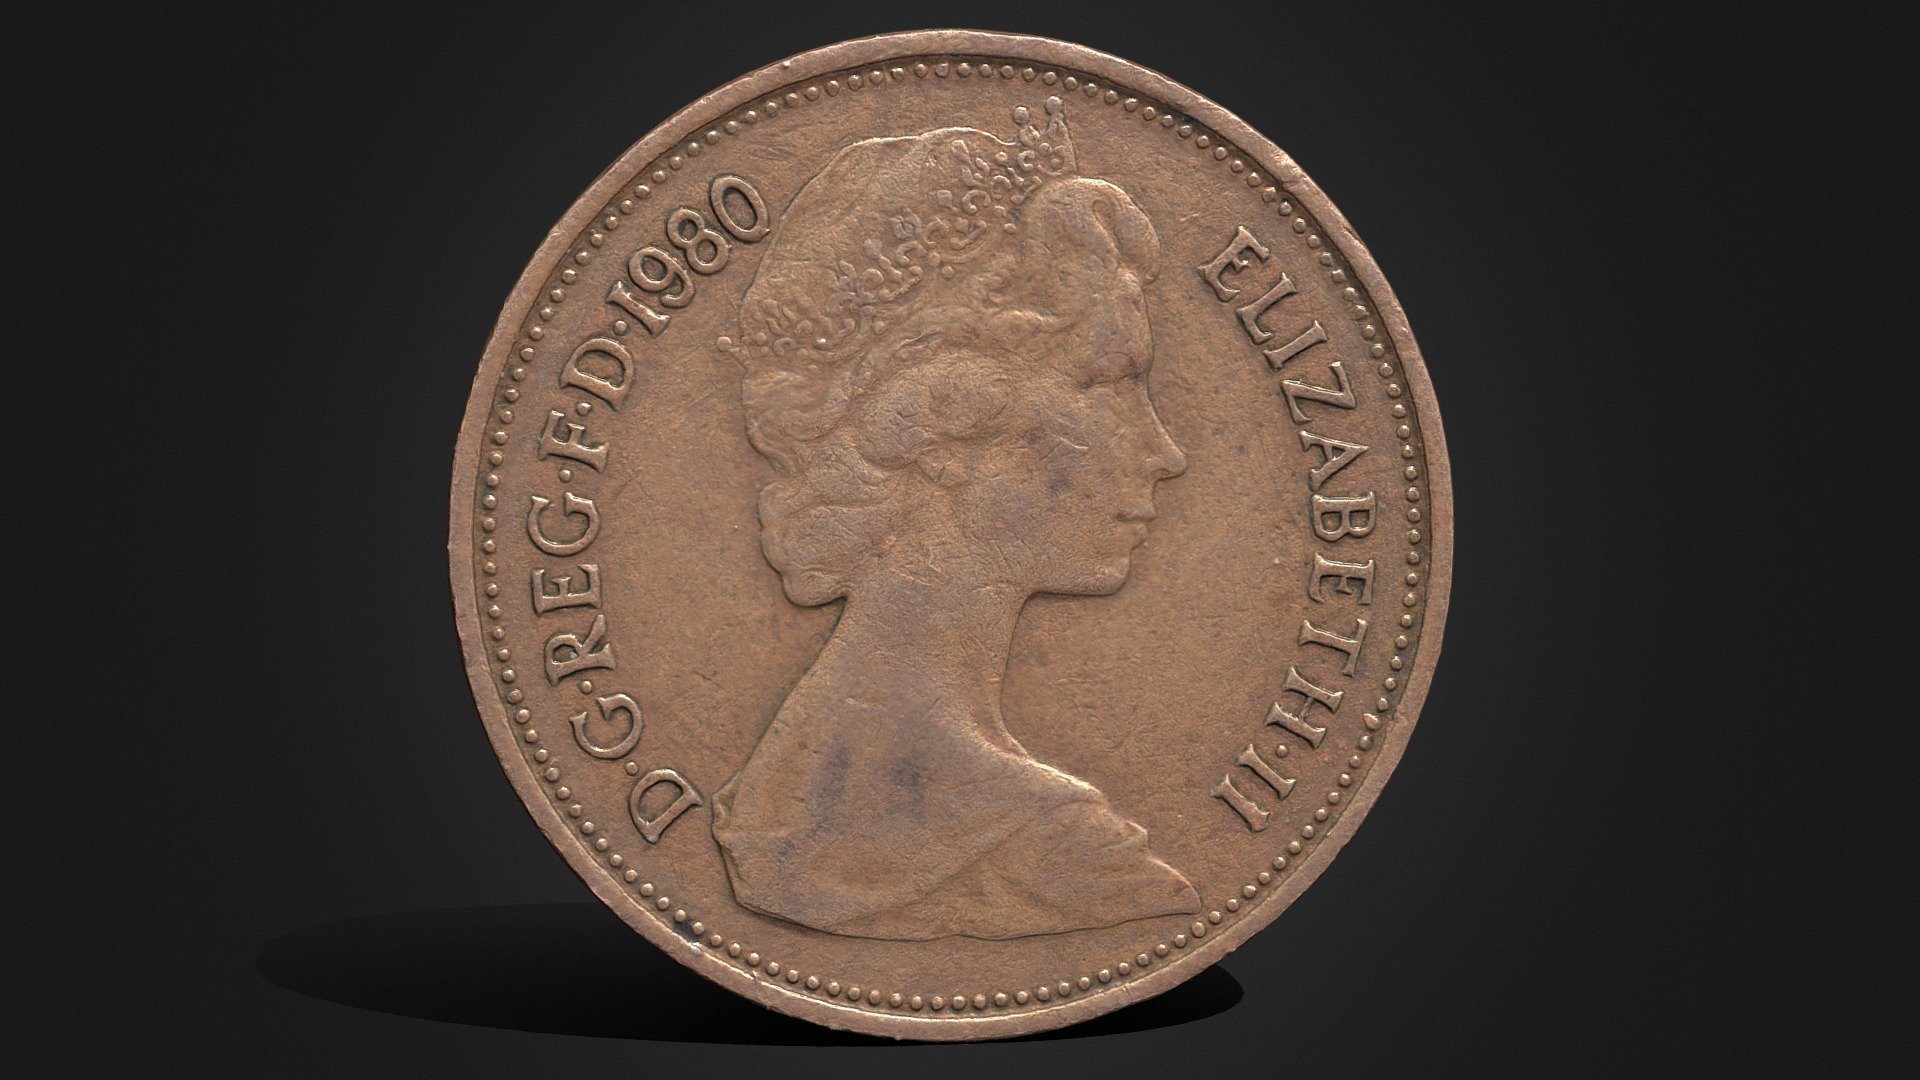 2 Pence - Elizabeth II  (1980) .::RAWscan::.

Photogrammetry scan - 2 Pence - Elizabeth II  (1980) .::RAWscan:: 3d model